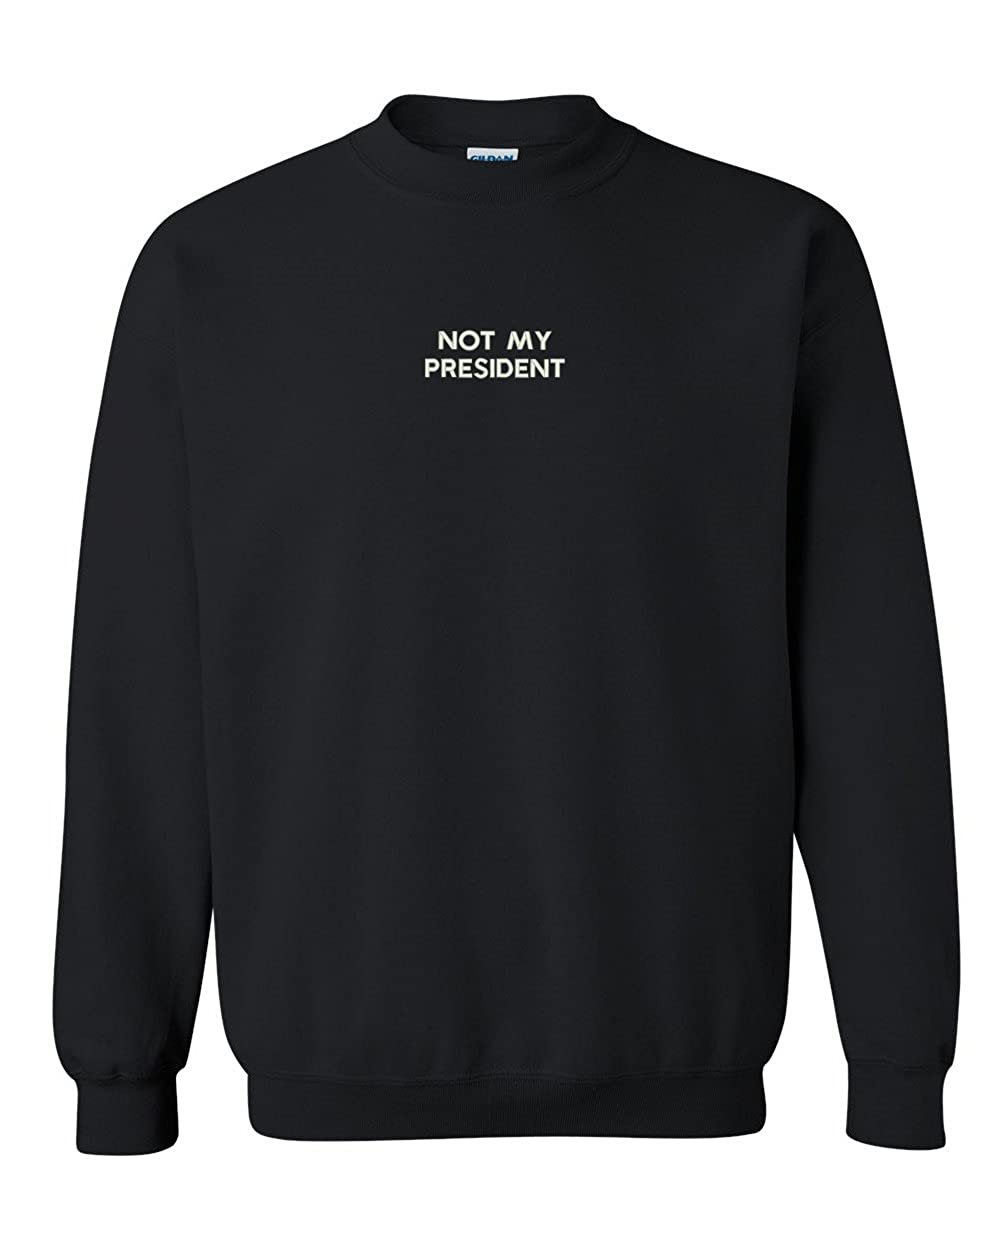 Trendy Apparel Shop President Embroidered Crewneck Sweatshirt